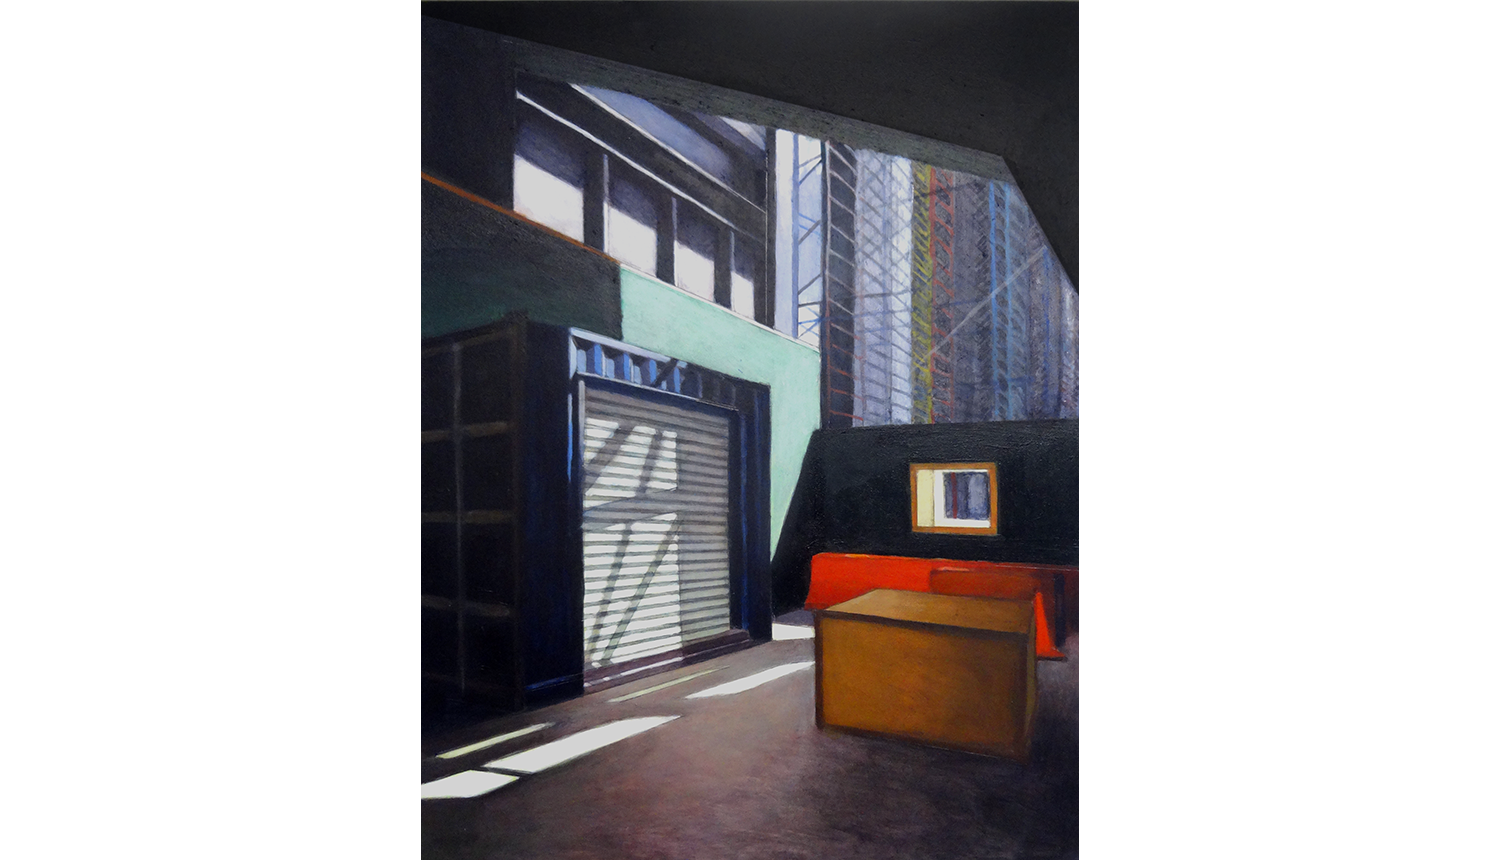   Hudson Yards 9, 2015 , Acrylic on board, 12 x 16” 